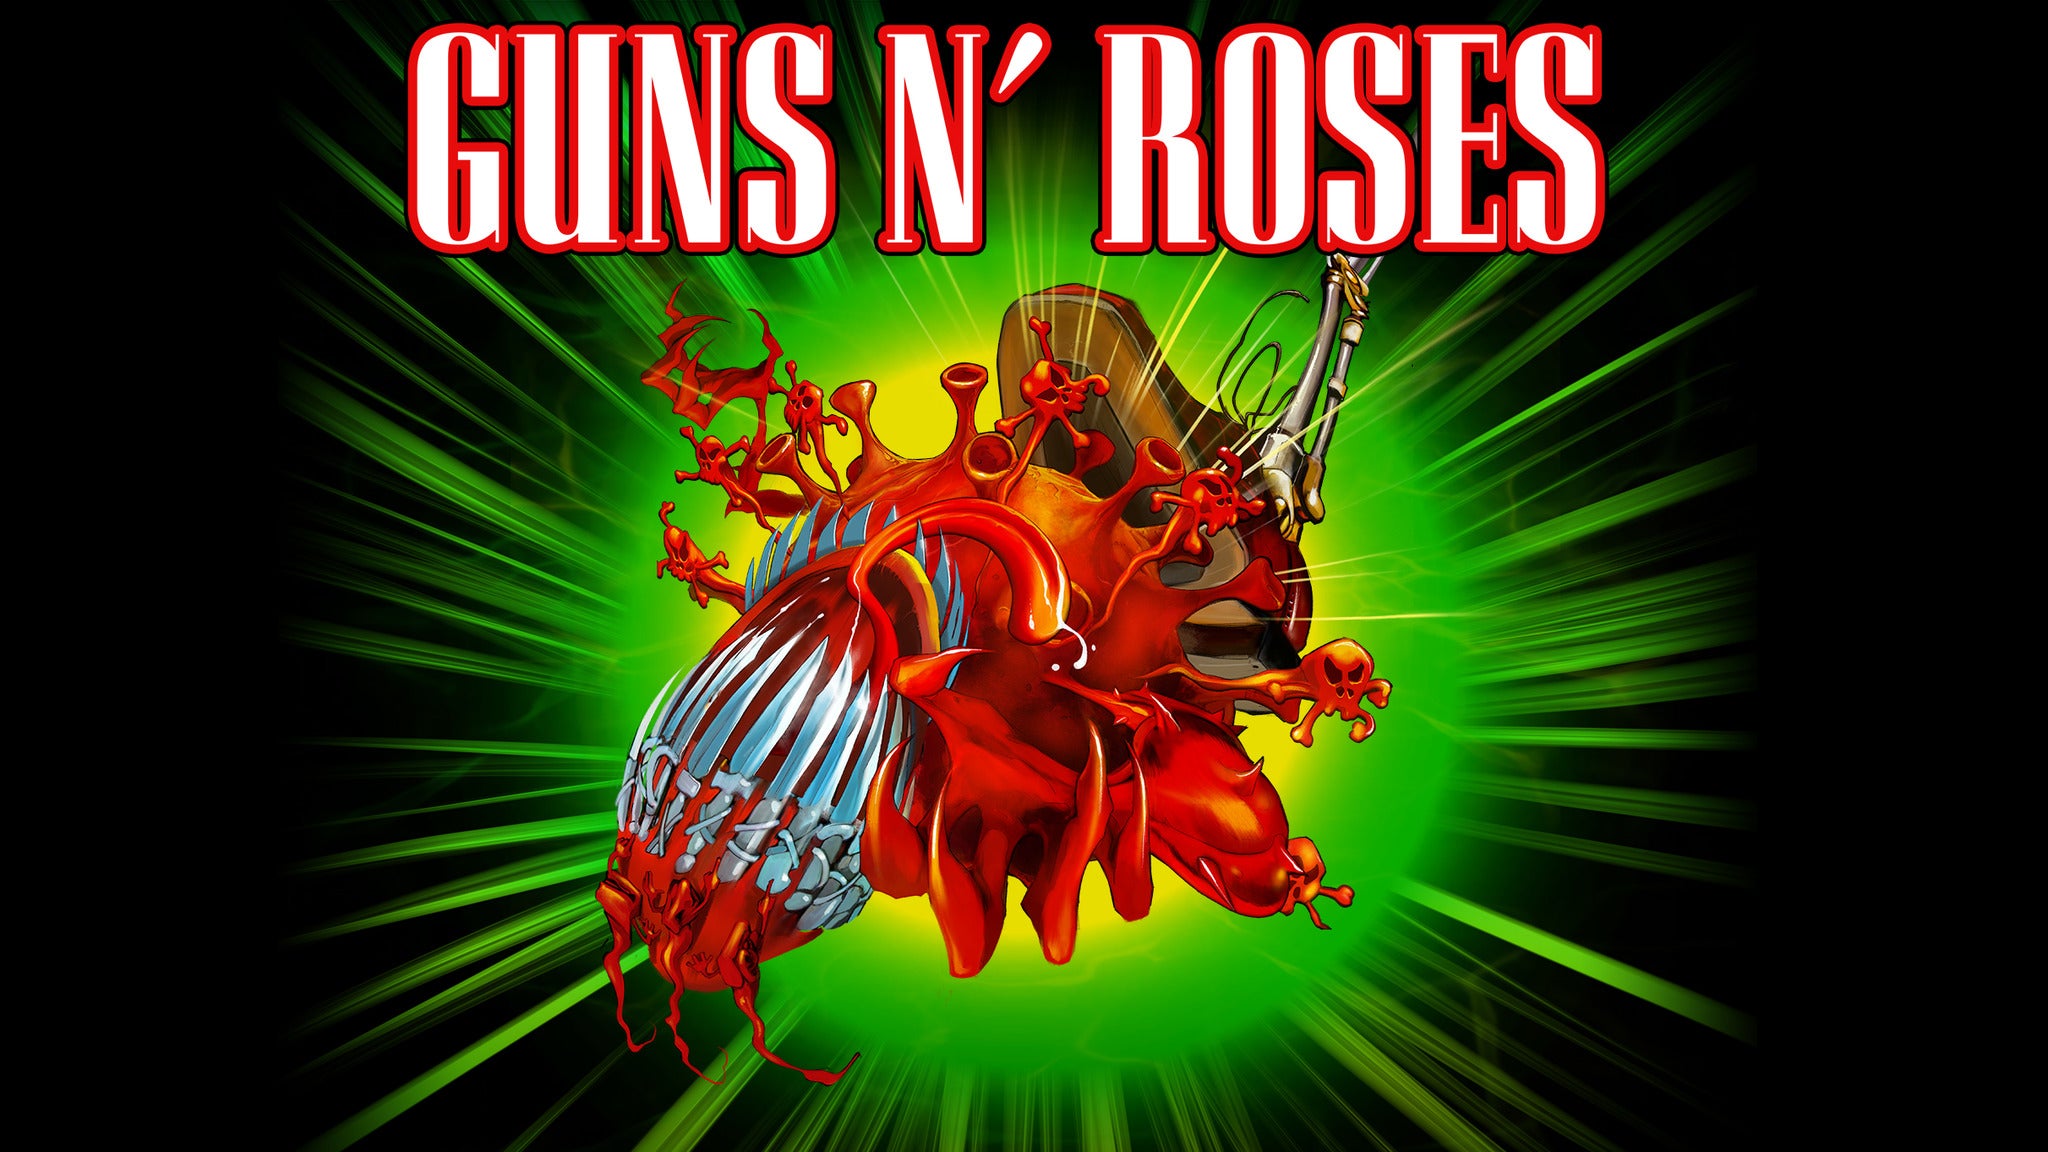 Guns N' Roses 2021 Tour pre-sale password